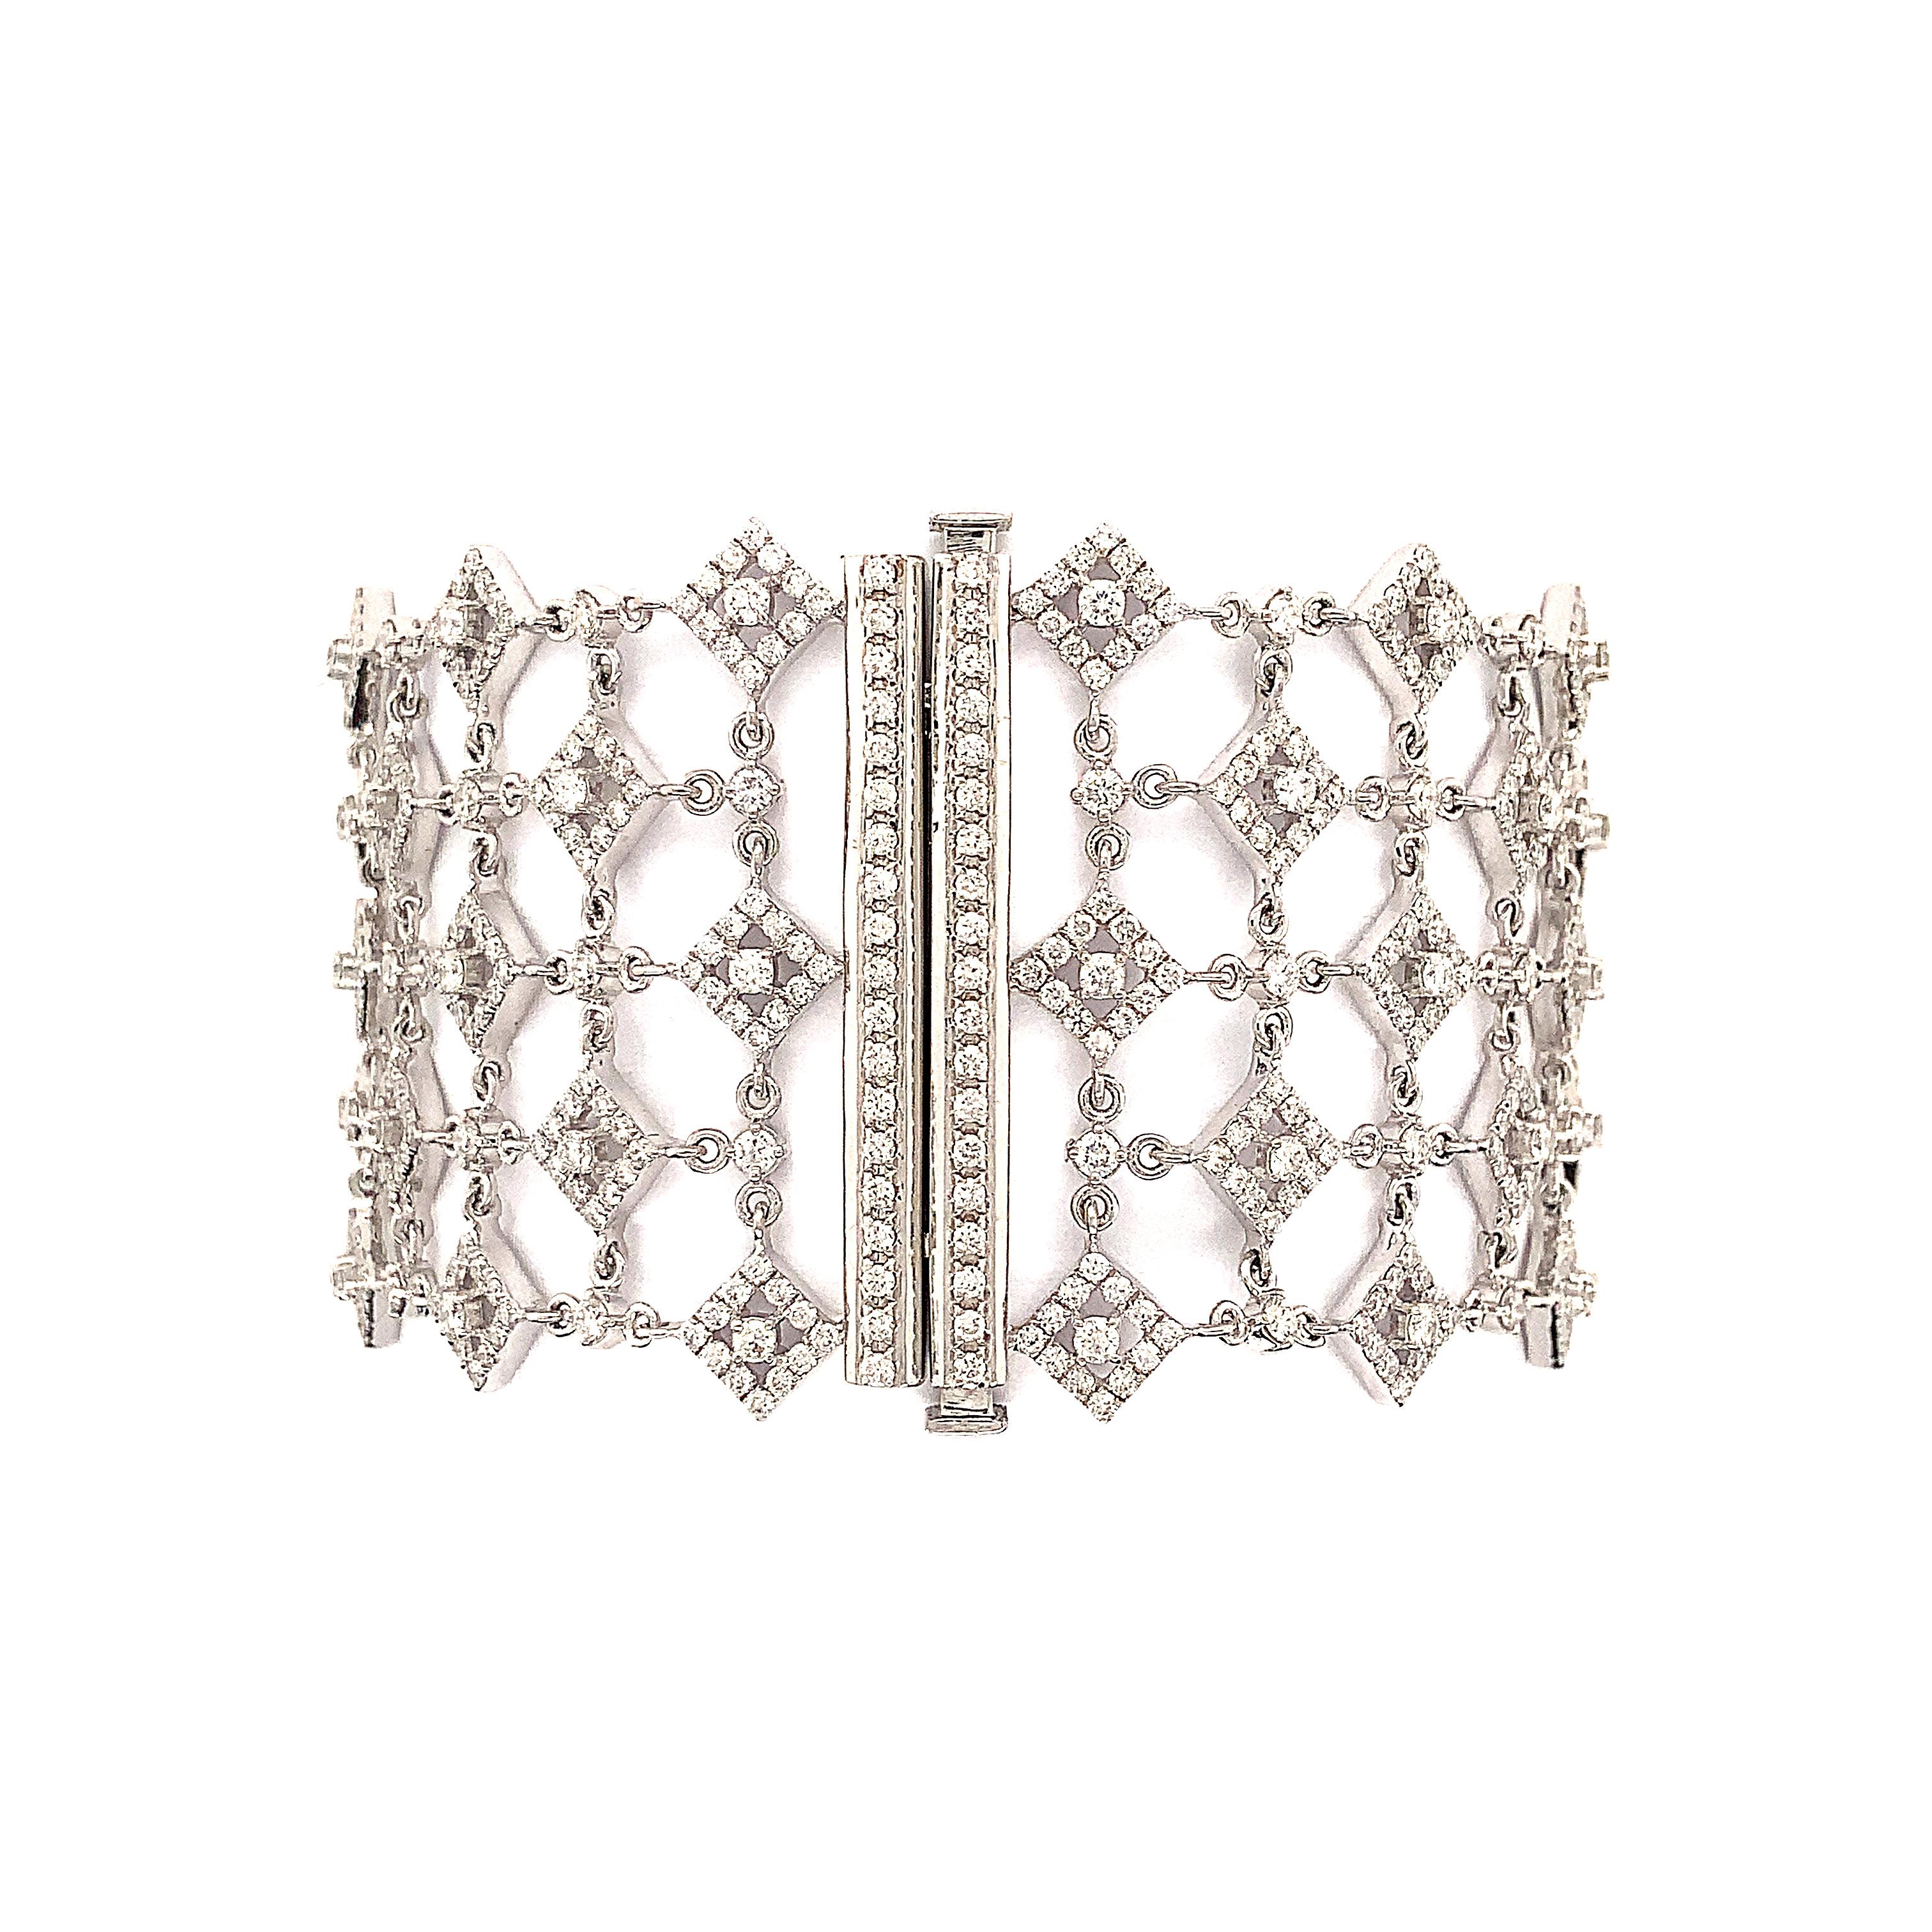 Women's Afarin Collection 5 Row Fancy 7 carat Diamond Bracelet set in 18K White Gold For Sale